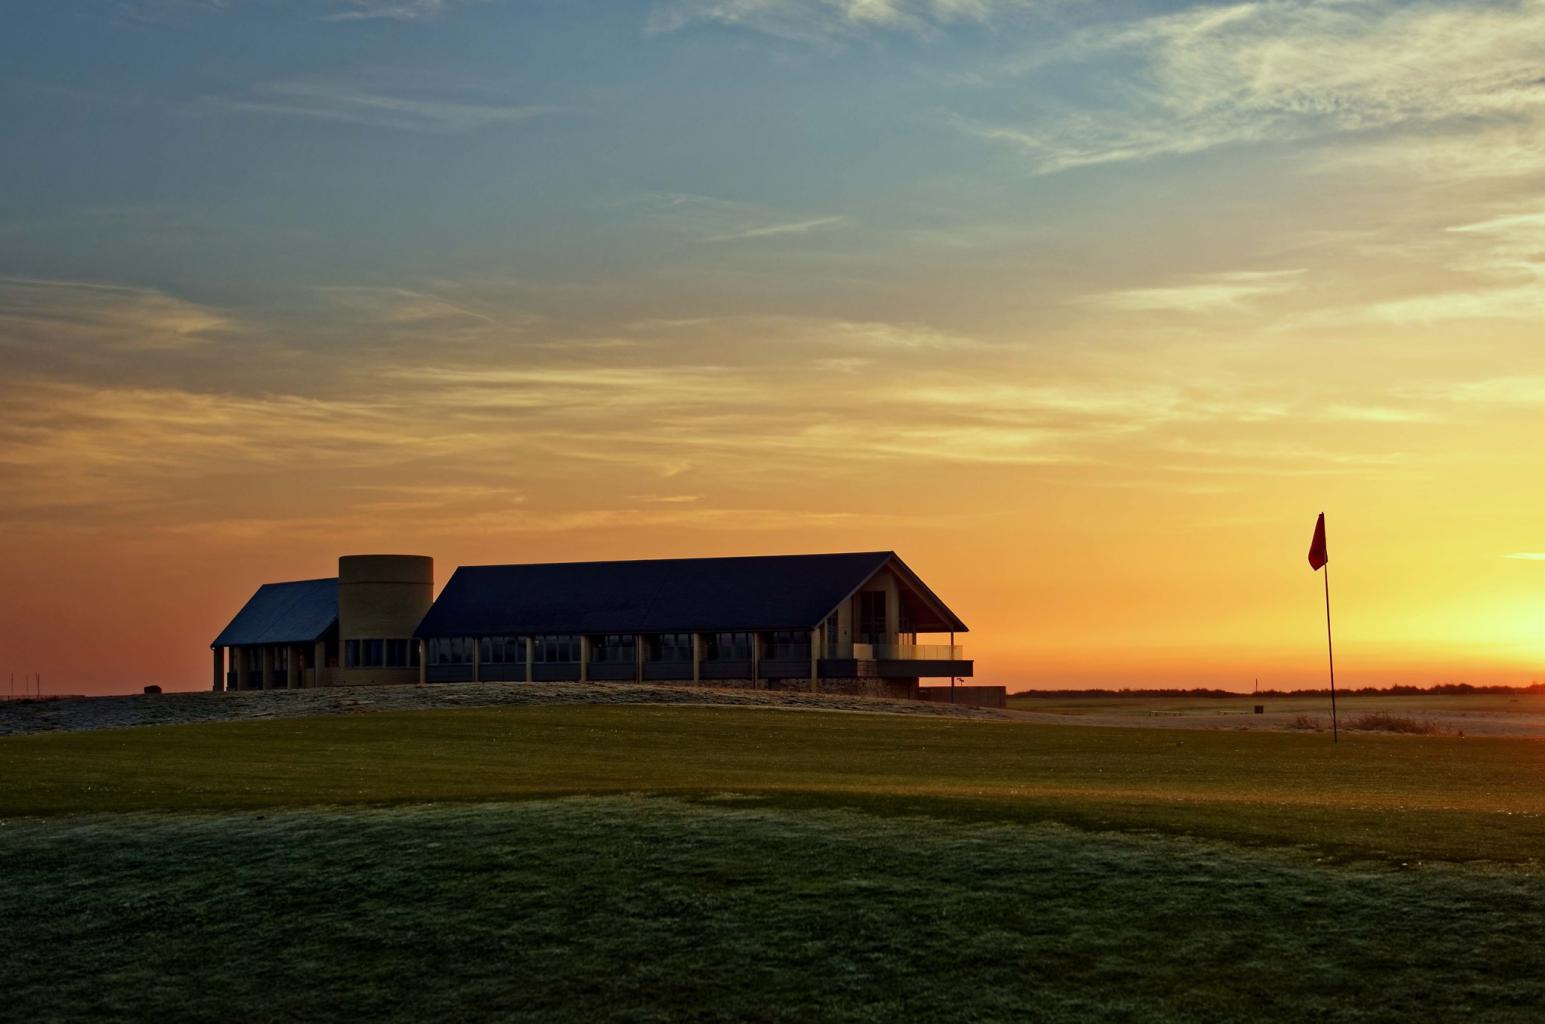 Scottish Golf Course in the setting sun